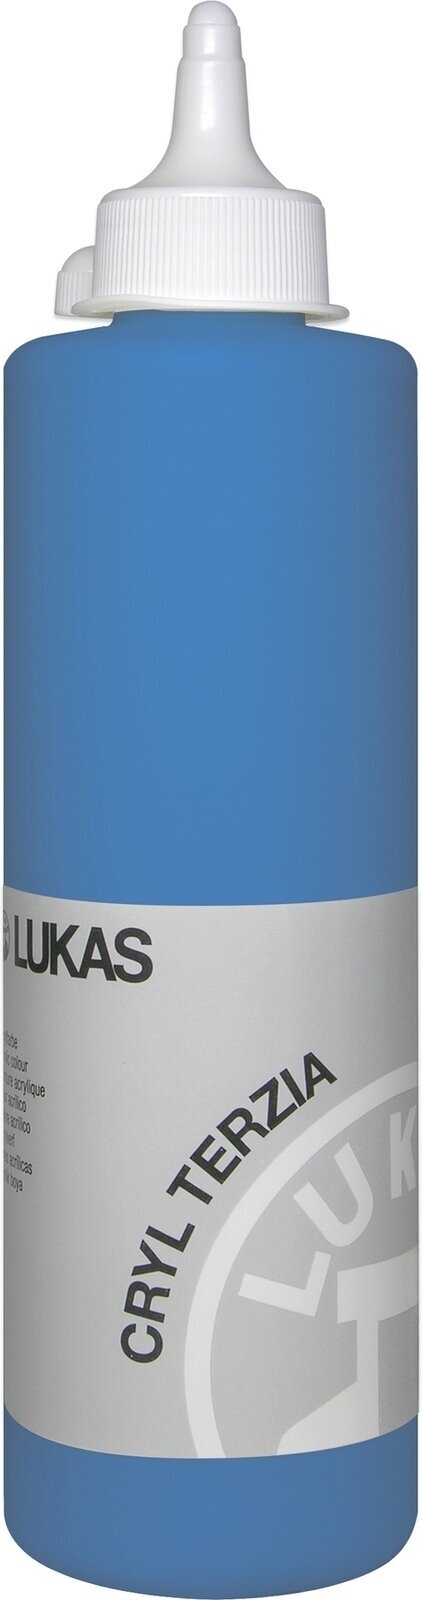 Akrilna barva Lukas Cryl Terzia Acrylic Paint Plastic Bottle Akrilna barva Primary Blue 500 ml 1 kos